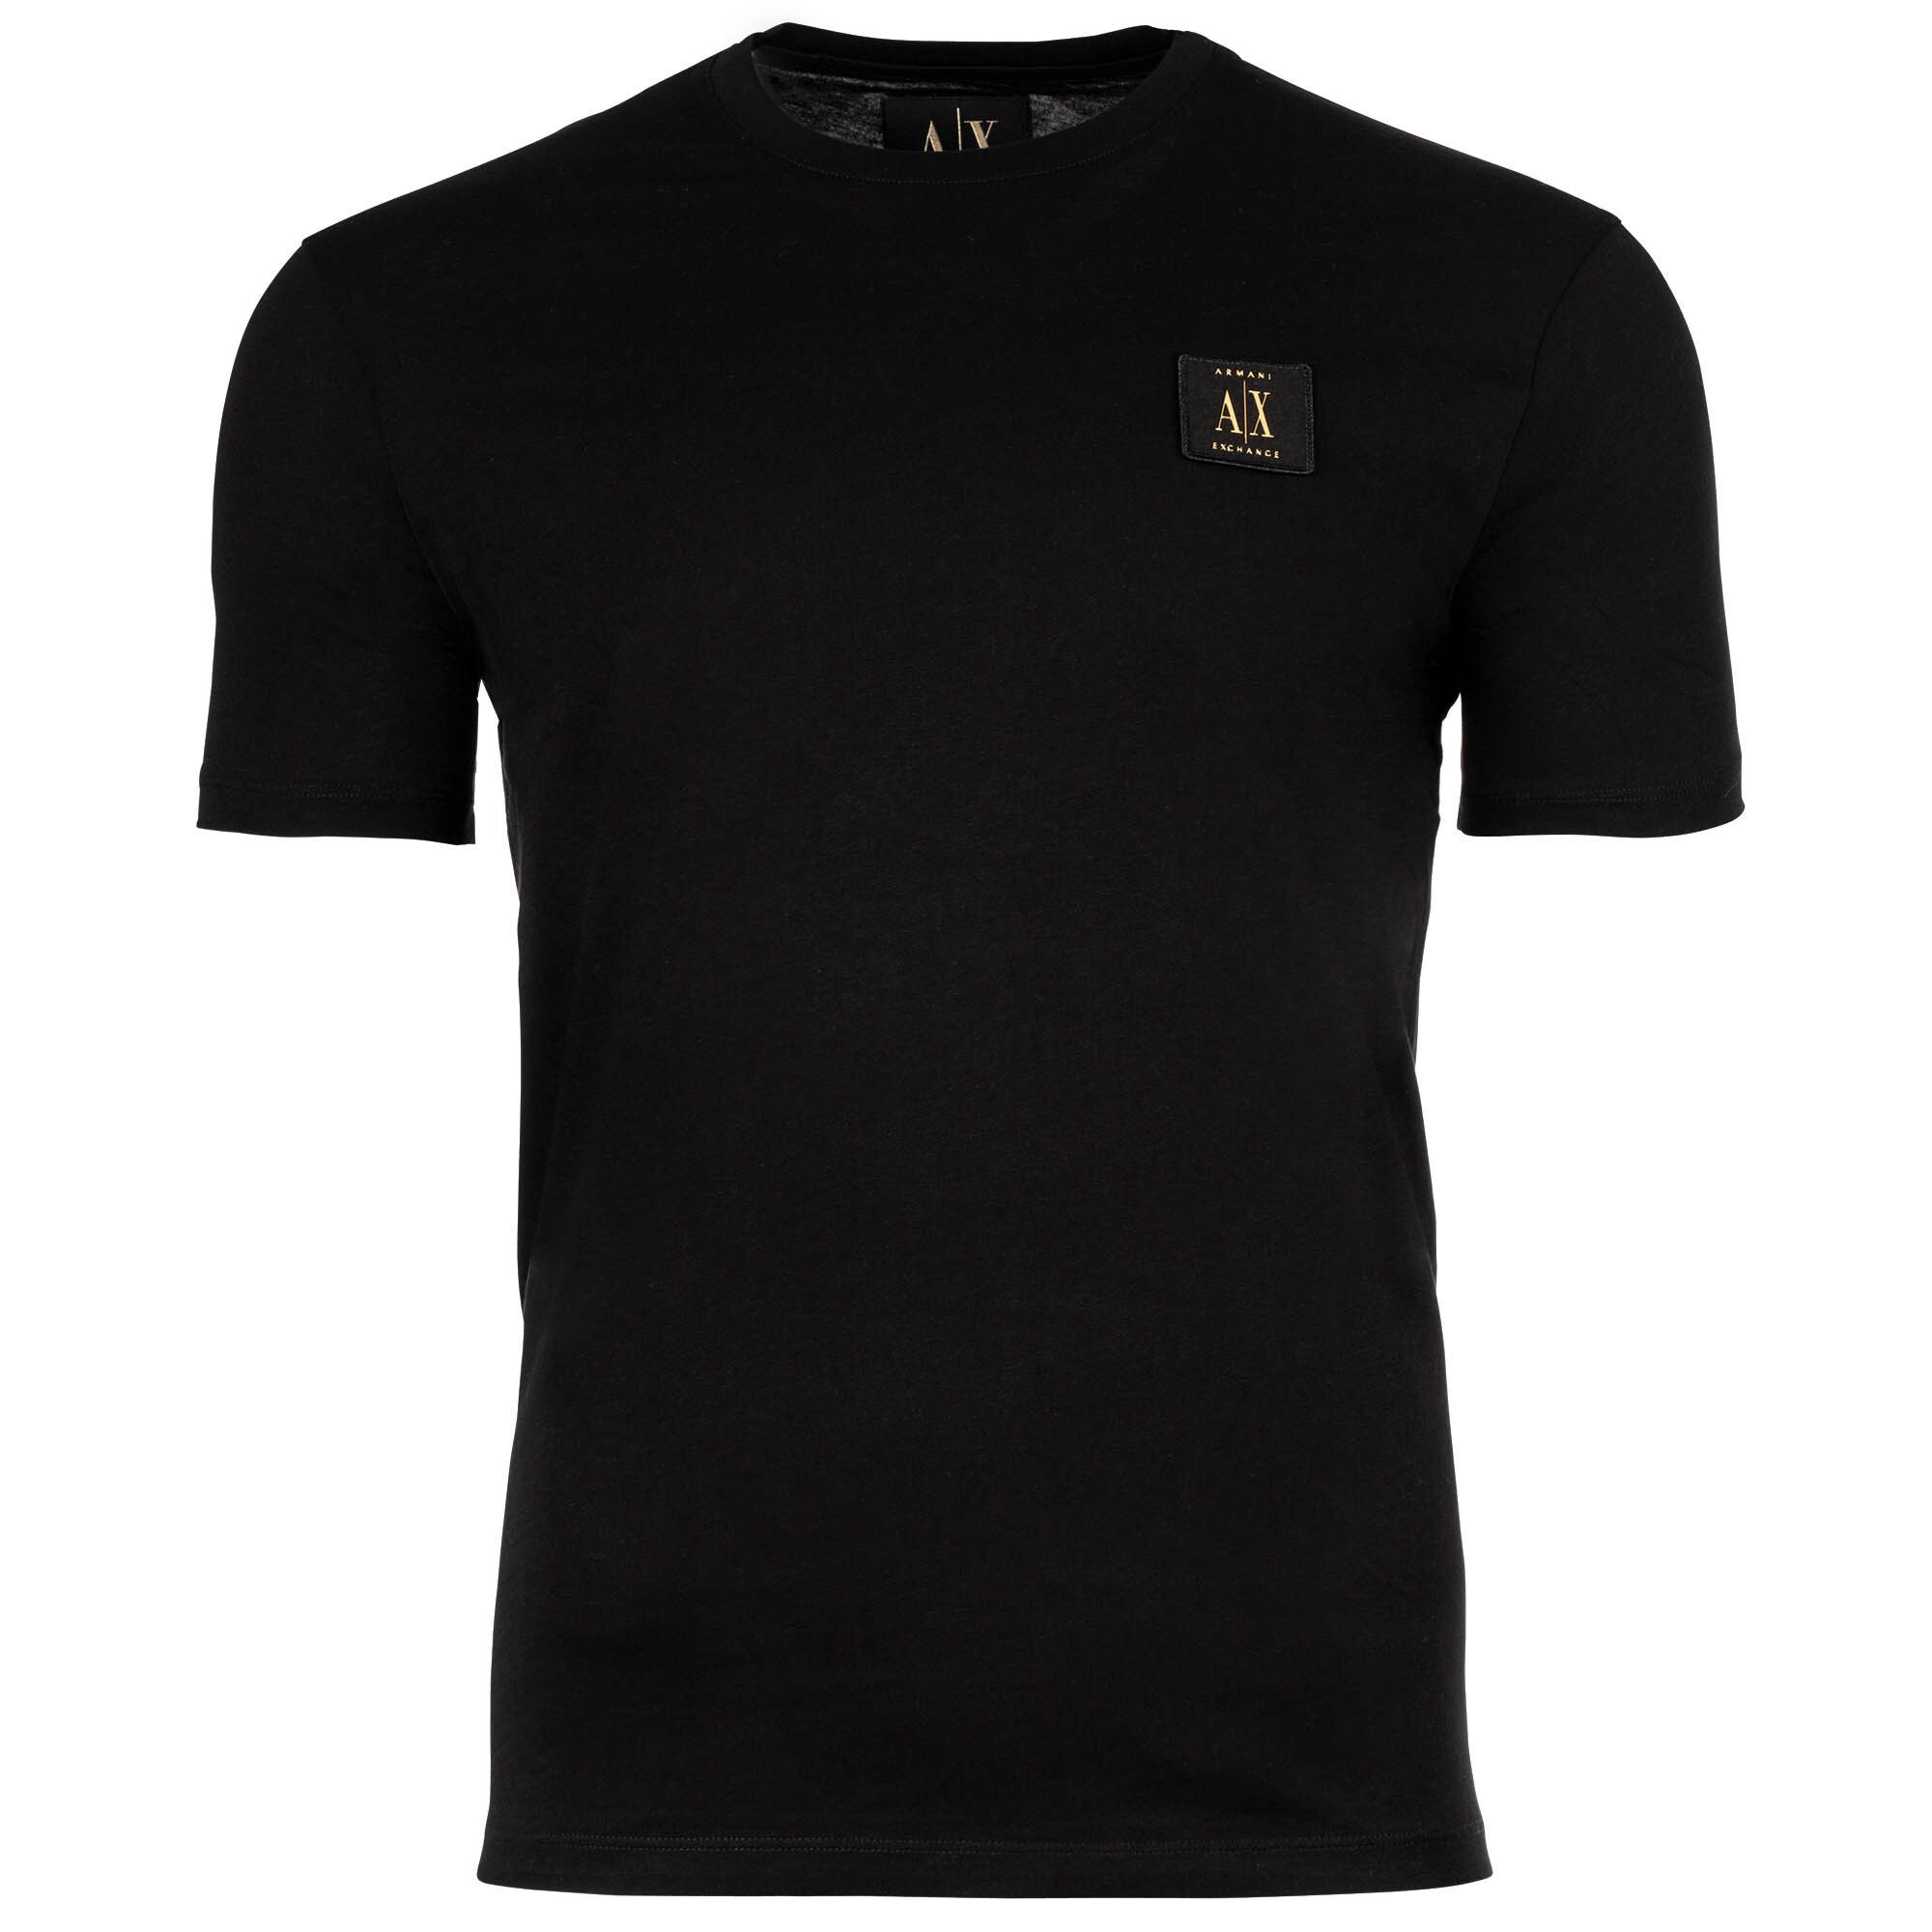 ARMANI EXCHANGE T-Shirt Herren T-Shirt - Rundhals, Kurzarm, Logo